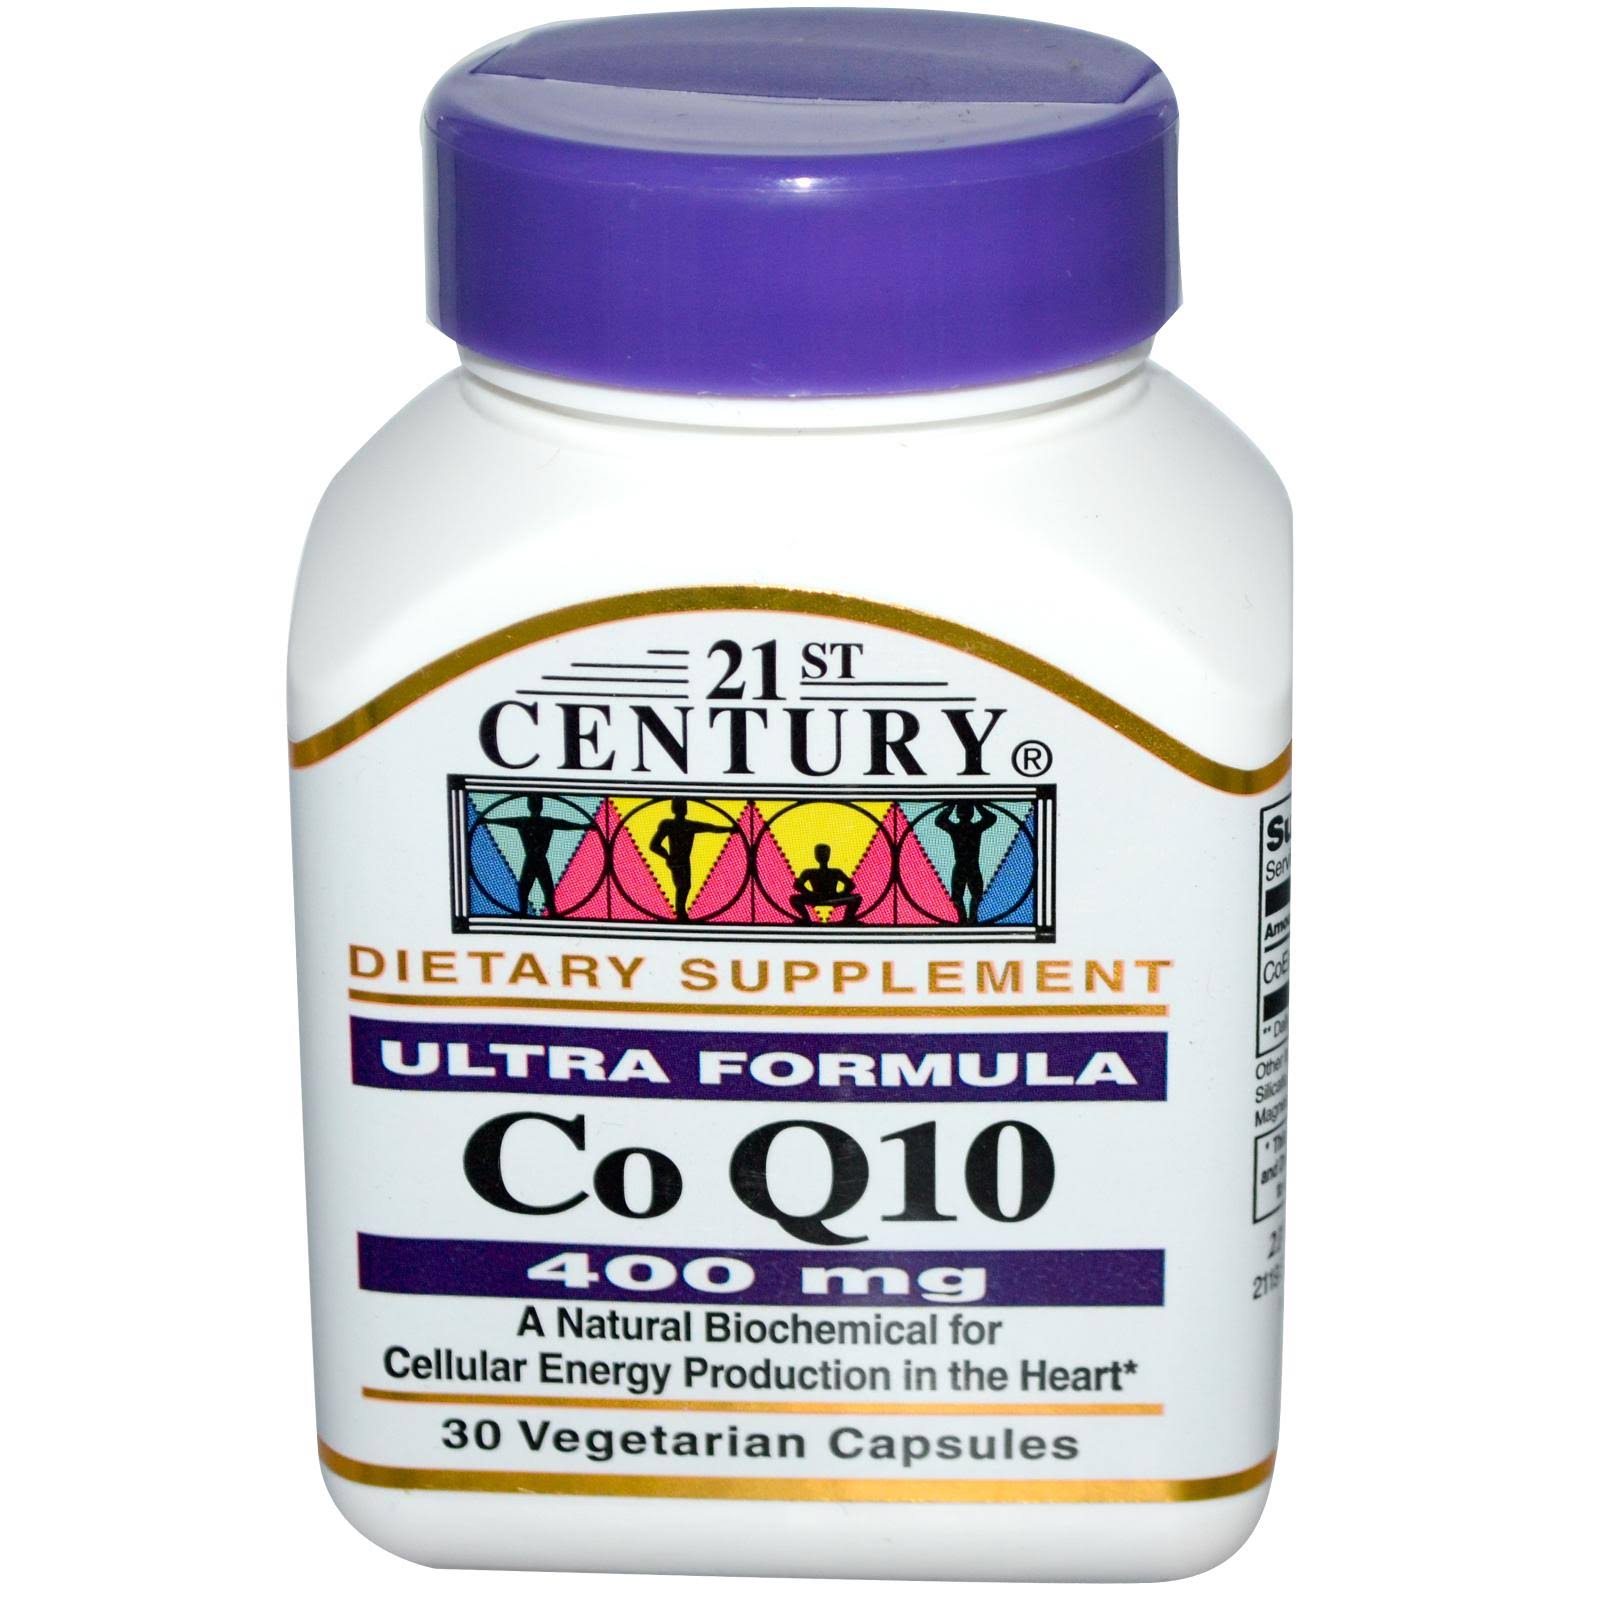 21st Century Co Q10 Ultra Formula Supplement - 400 mg Veg Capsules, 30ct